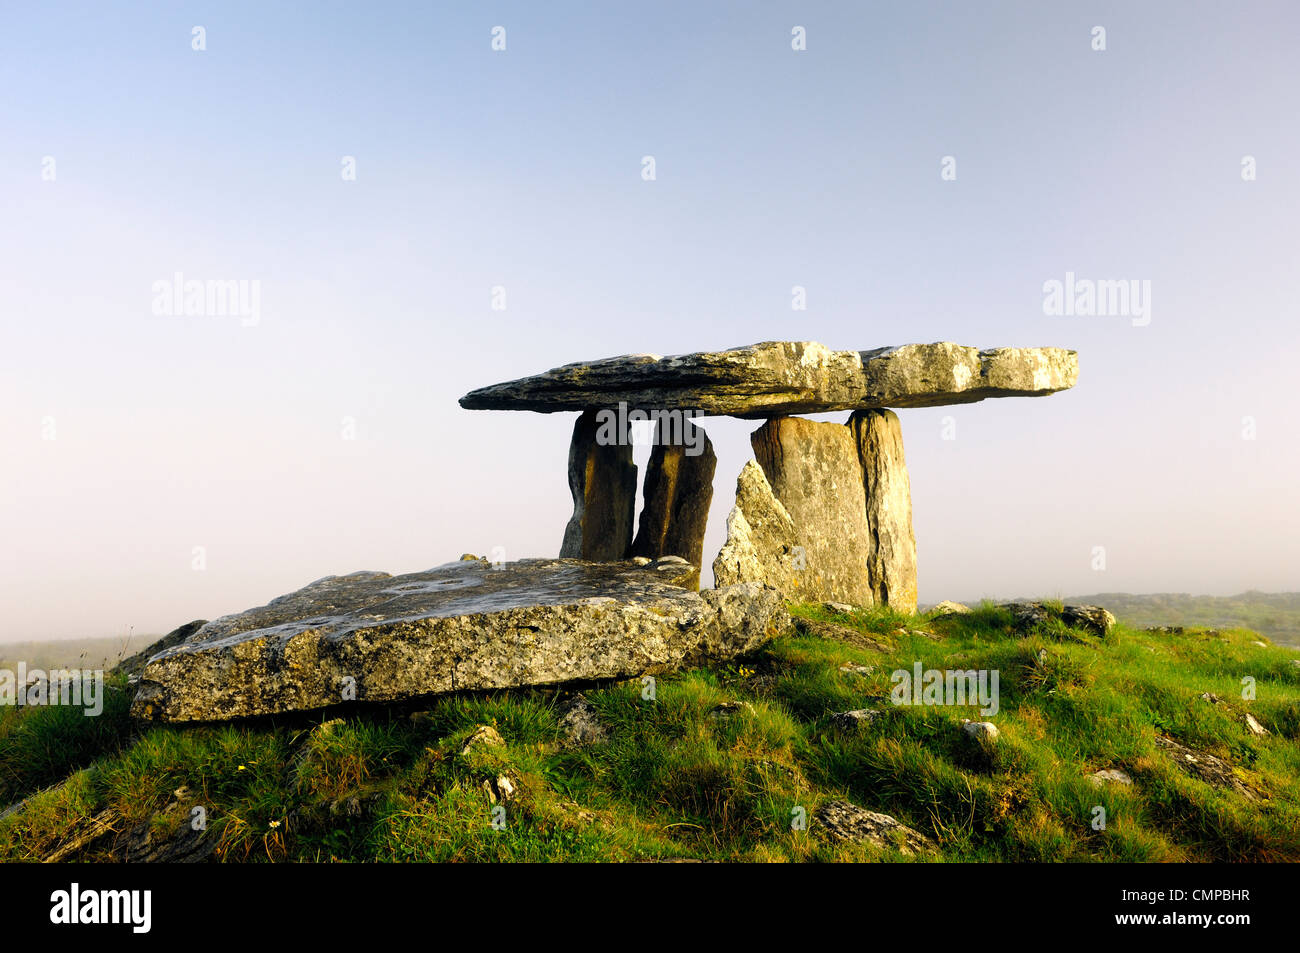 Poulnabrone prehistoric Stone Age dolmen tomb on The Burren limestone plateau near Cliffs of Moher, County Clare, Ireland Stock Photo